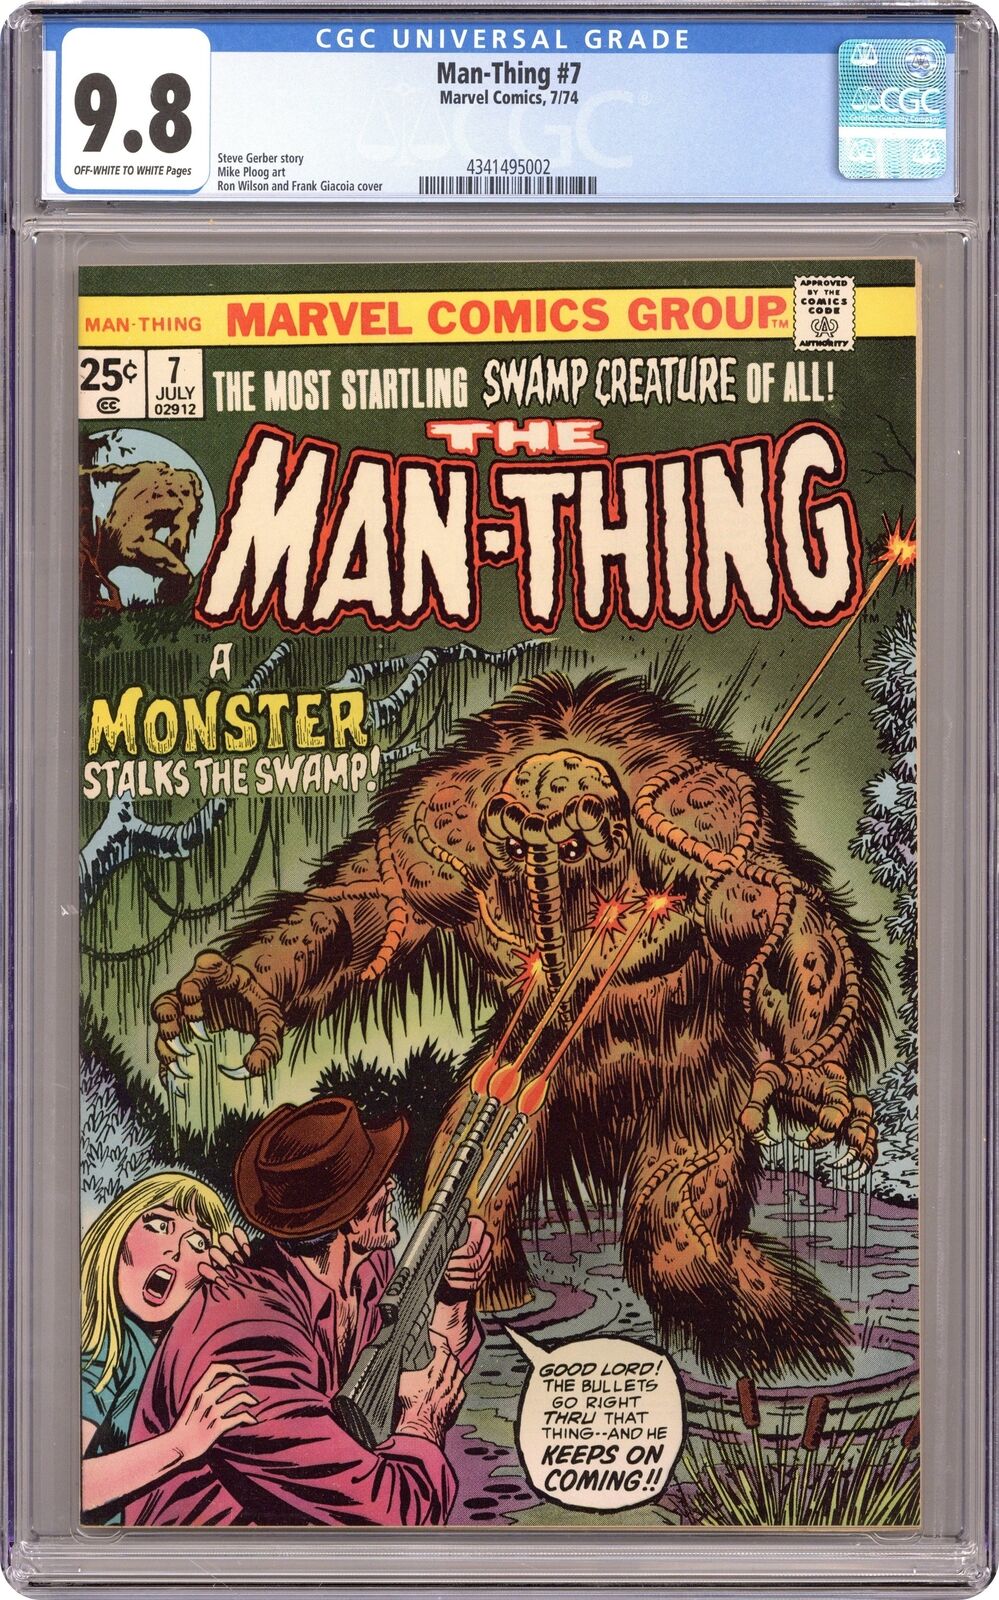 Man-Thing #7 CGC 9.8 1974 4341495002